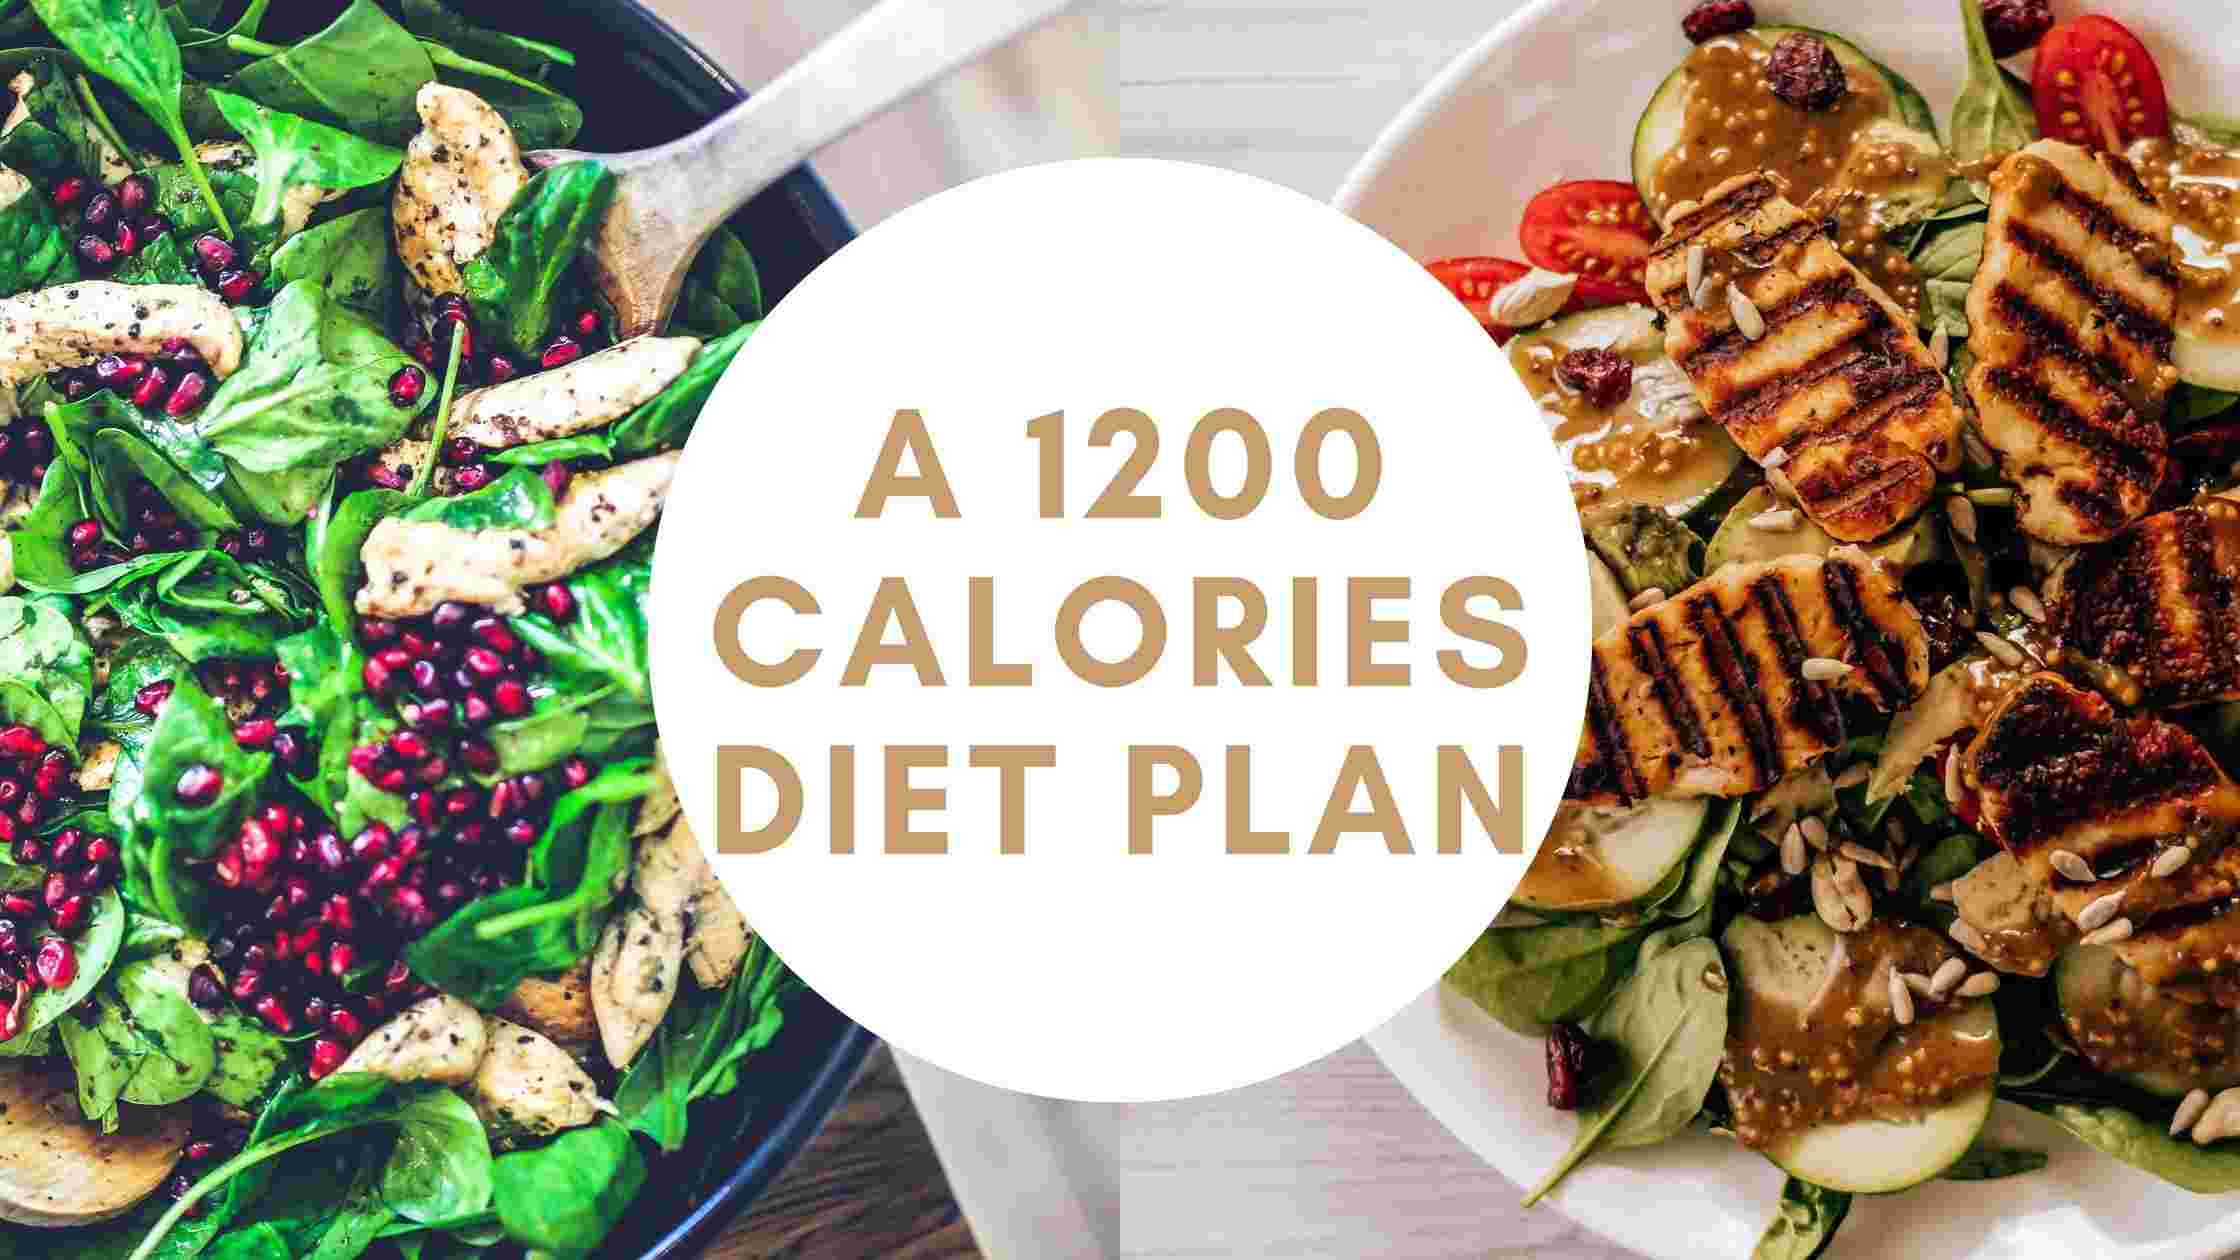 1200 calories diet plan